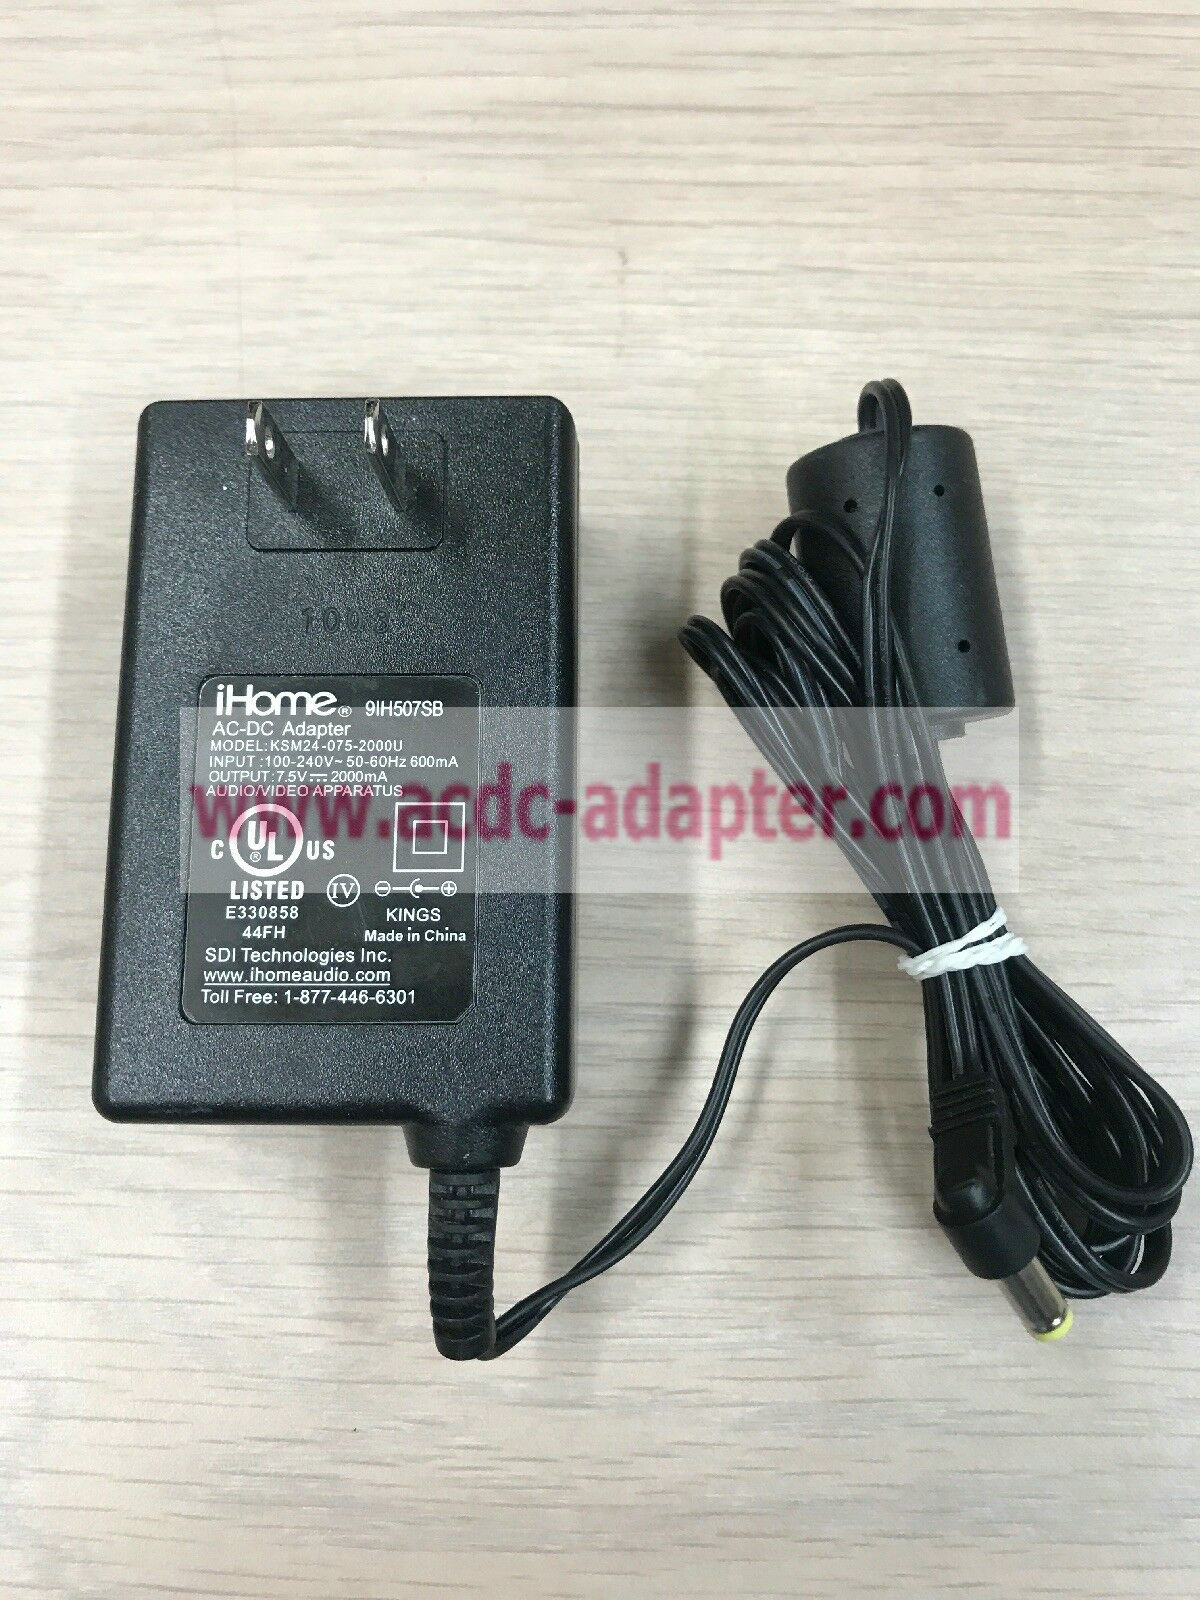 New iHOME KSS24-075-2000U AC Power Adapter 7.5V 2000mA